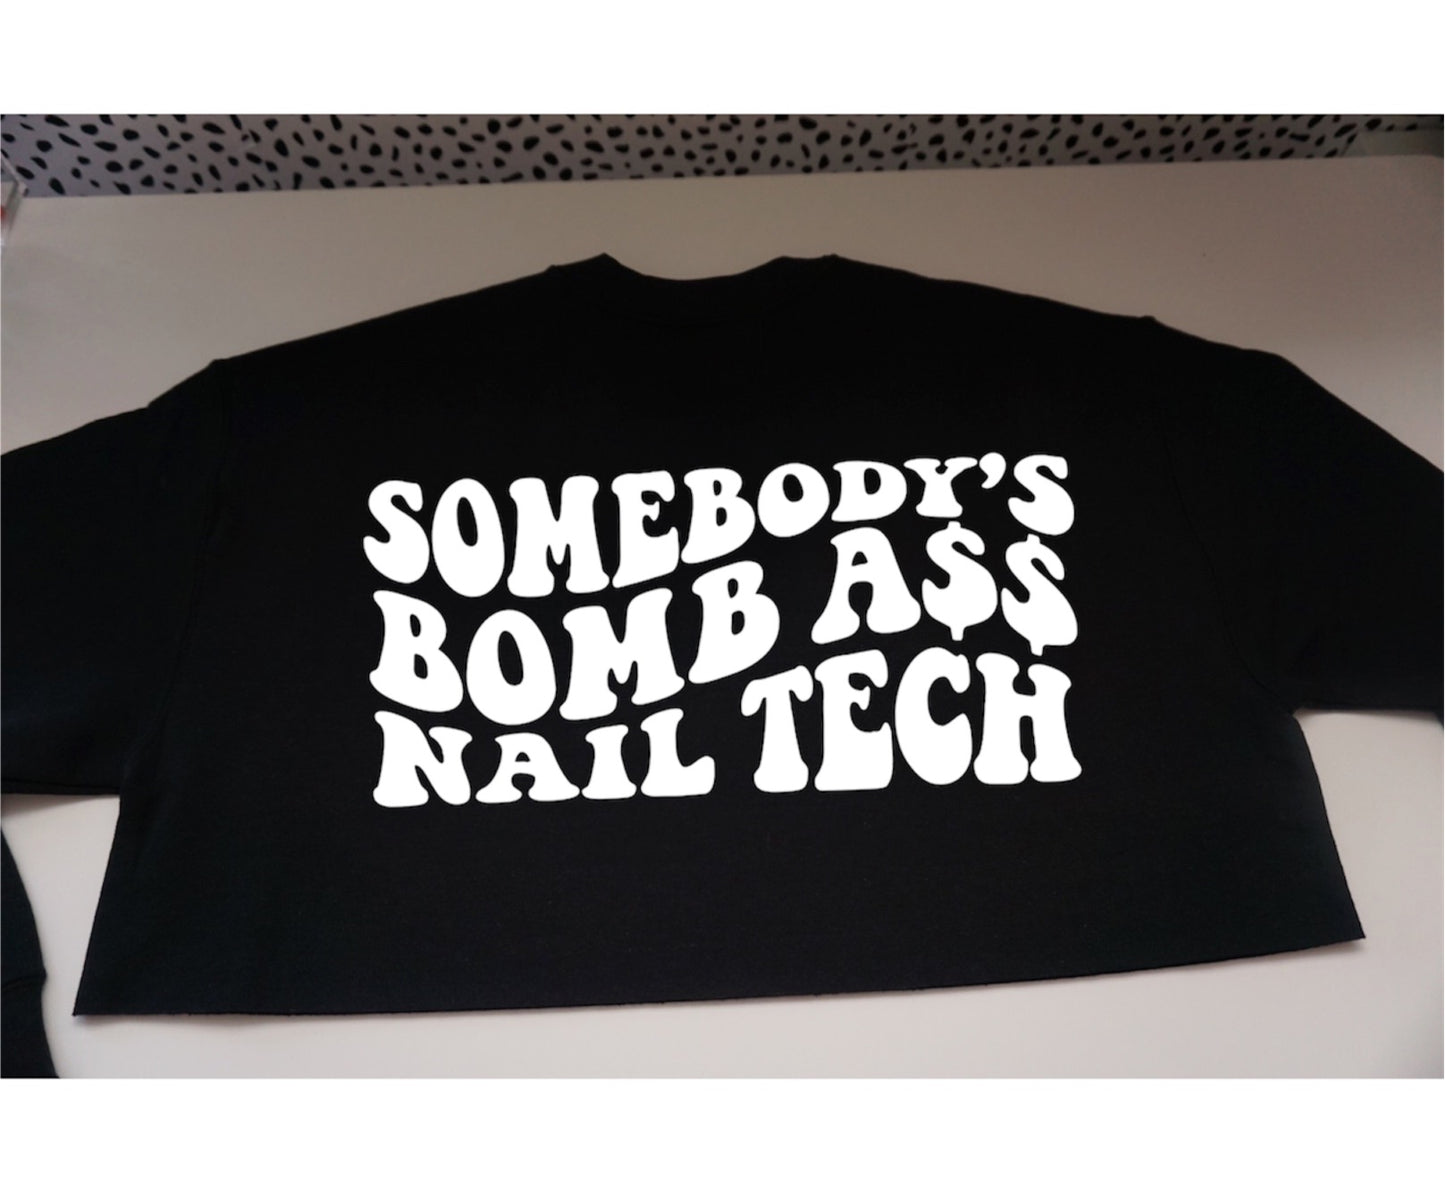 SOMEBODY’S BOMB ASS NAIL TECH sweatshirt.